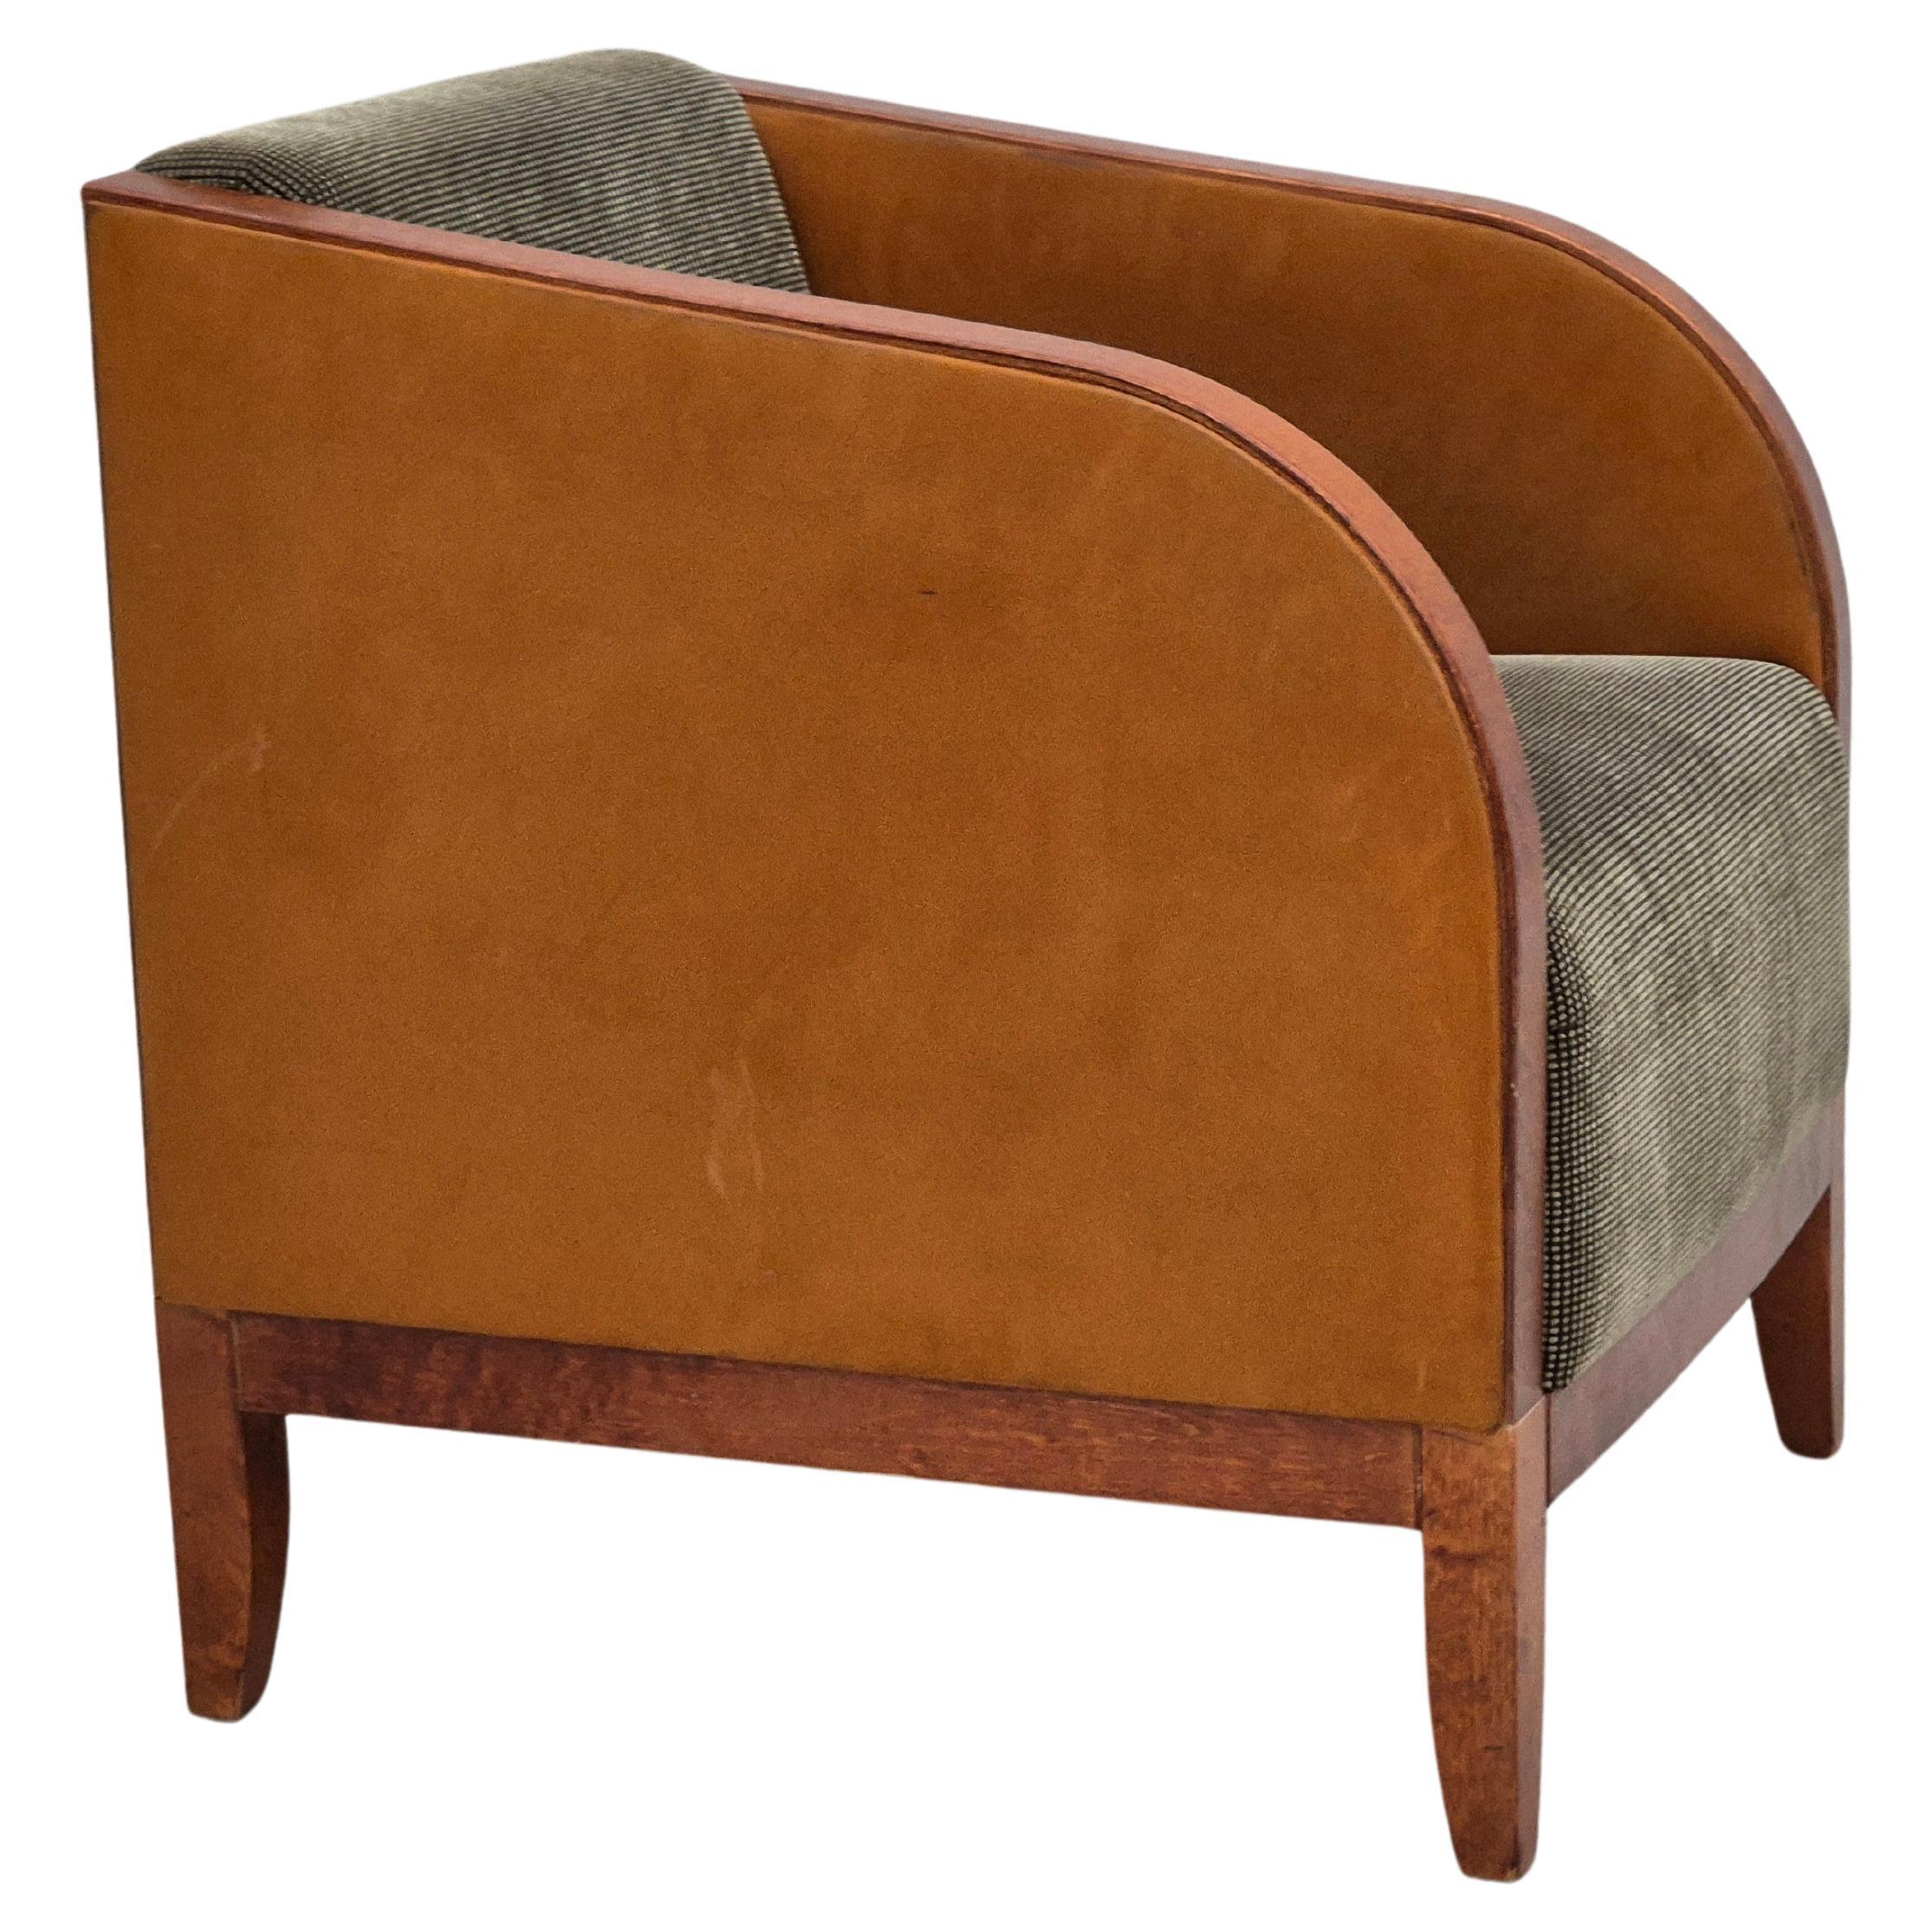 1970s, Scandinavian lounge chair, original very good condition, art deco style.